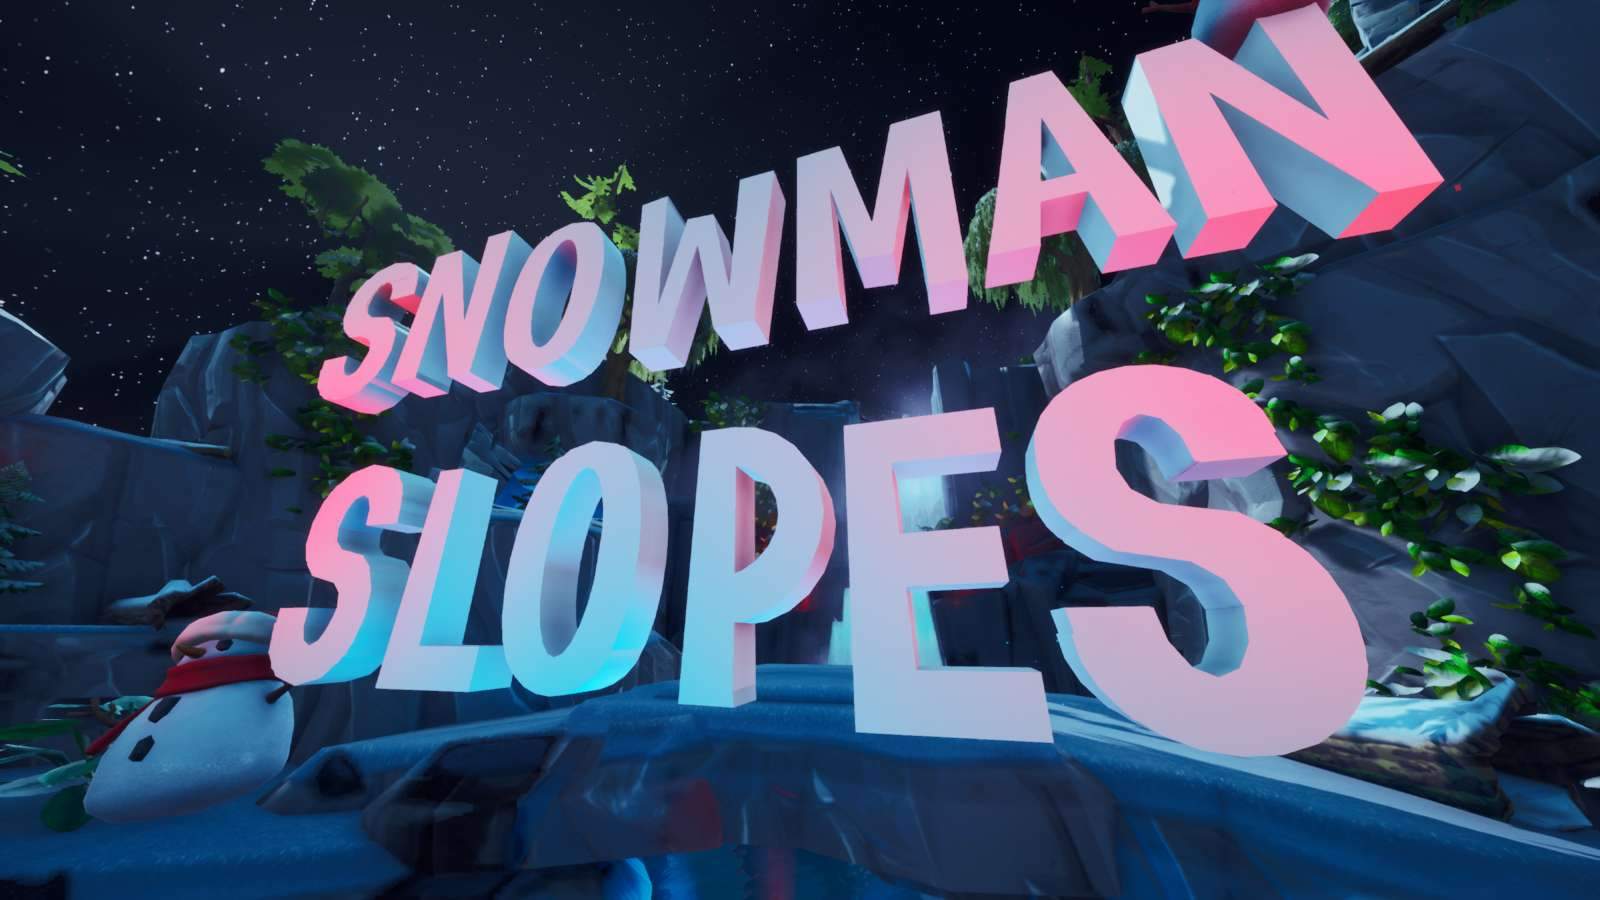 ❄ Snowman Slopes Zone Wars ❄